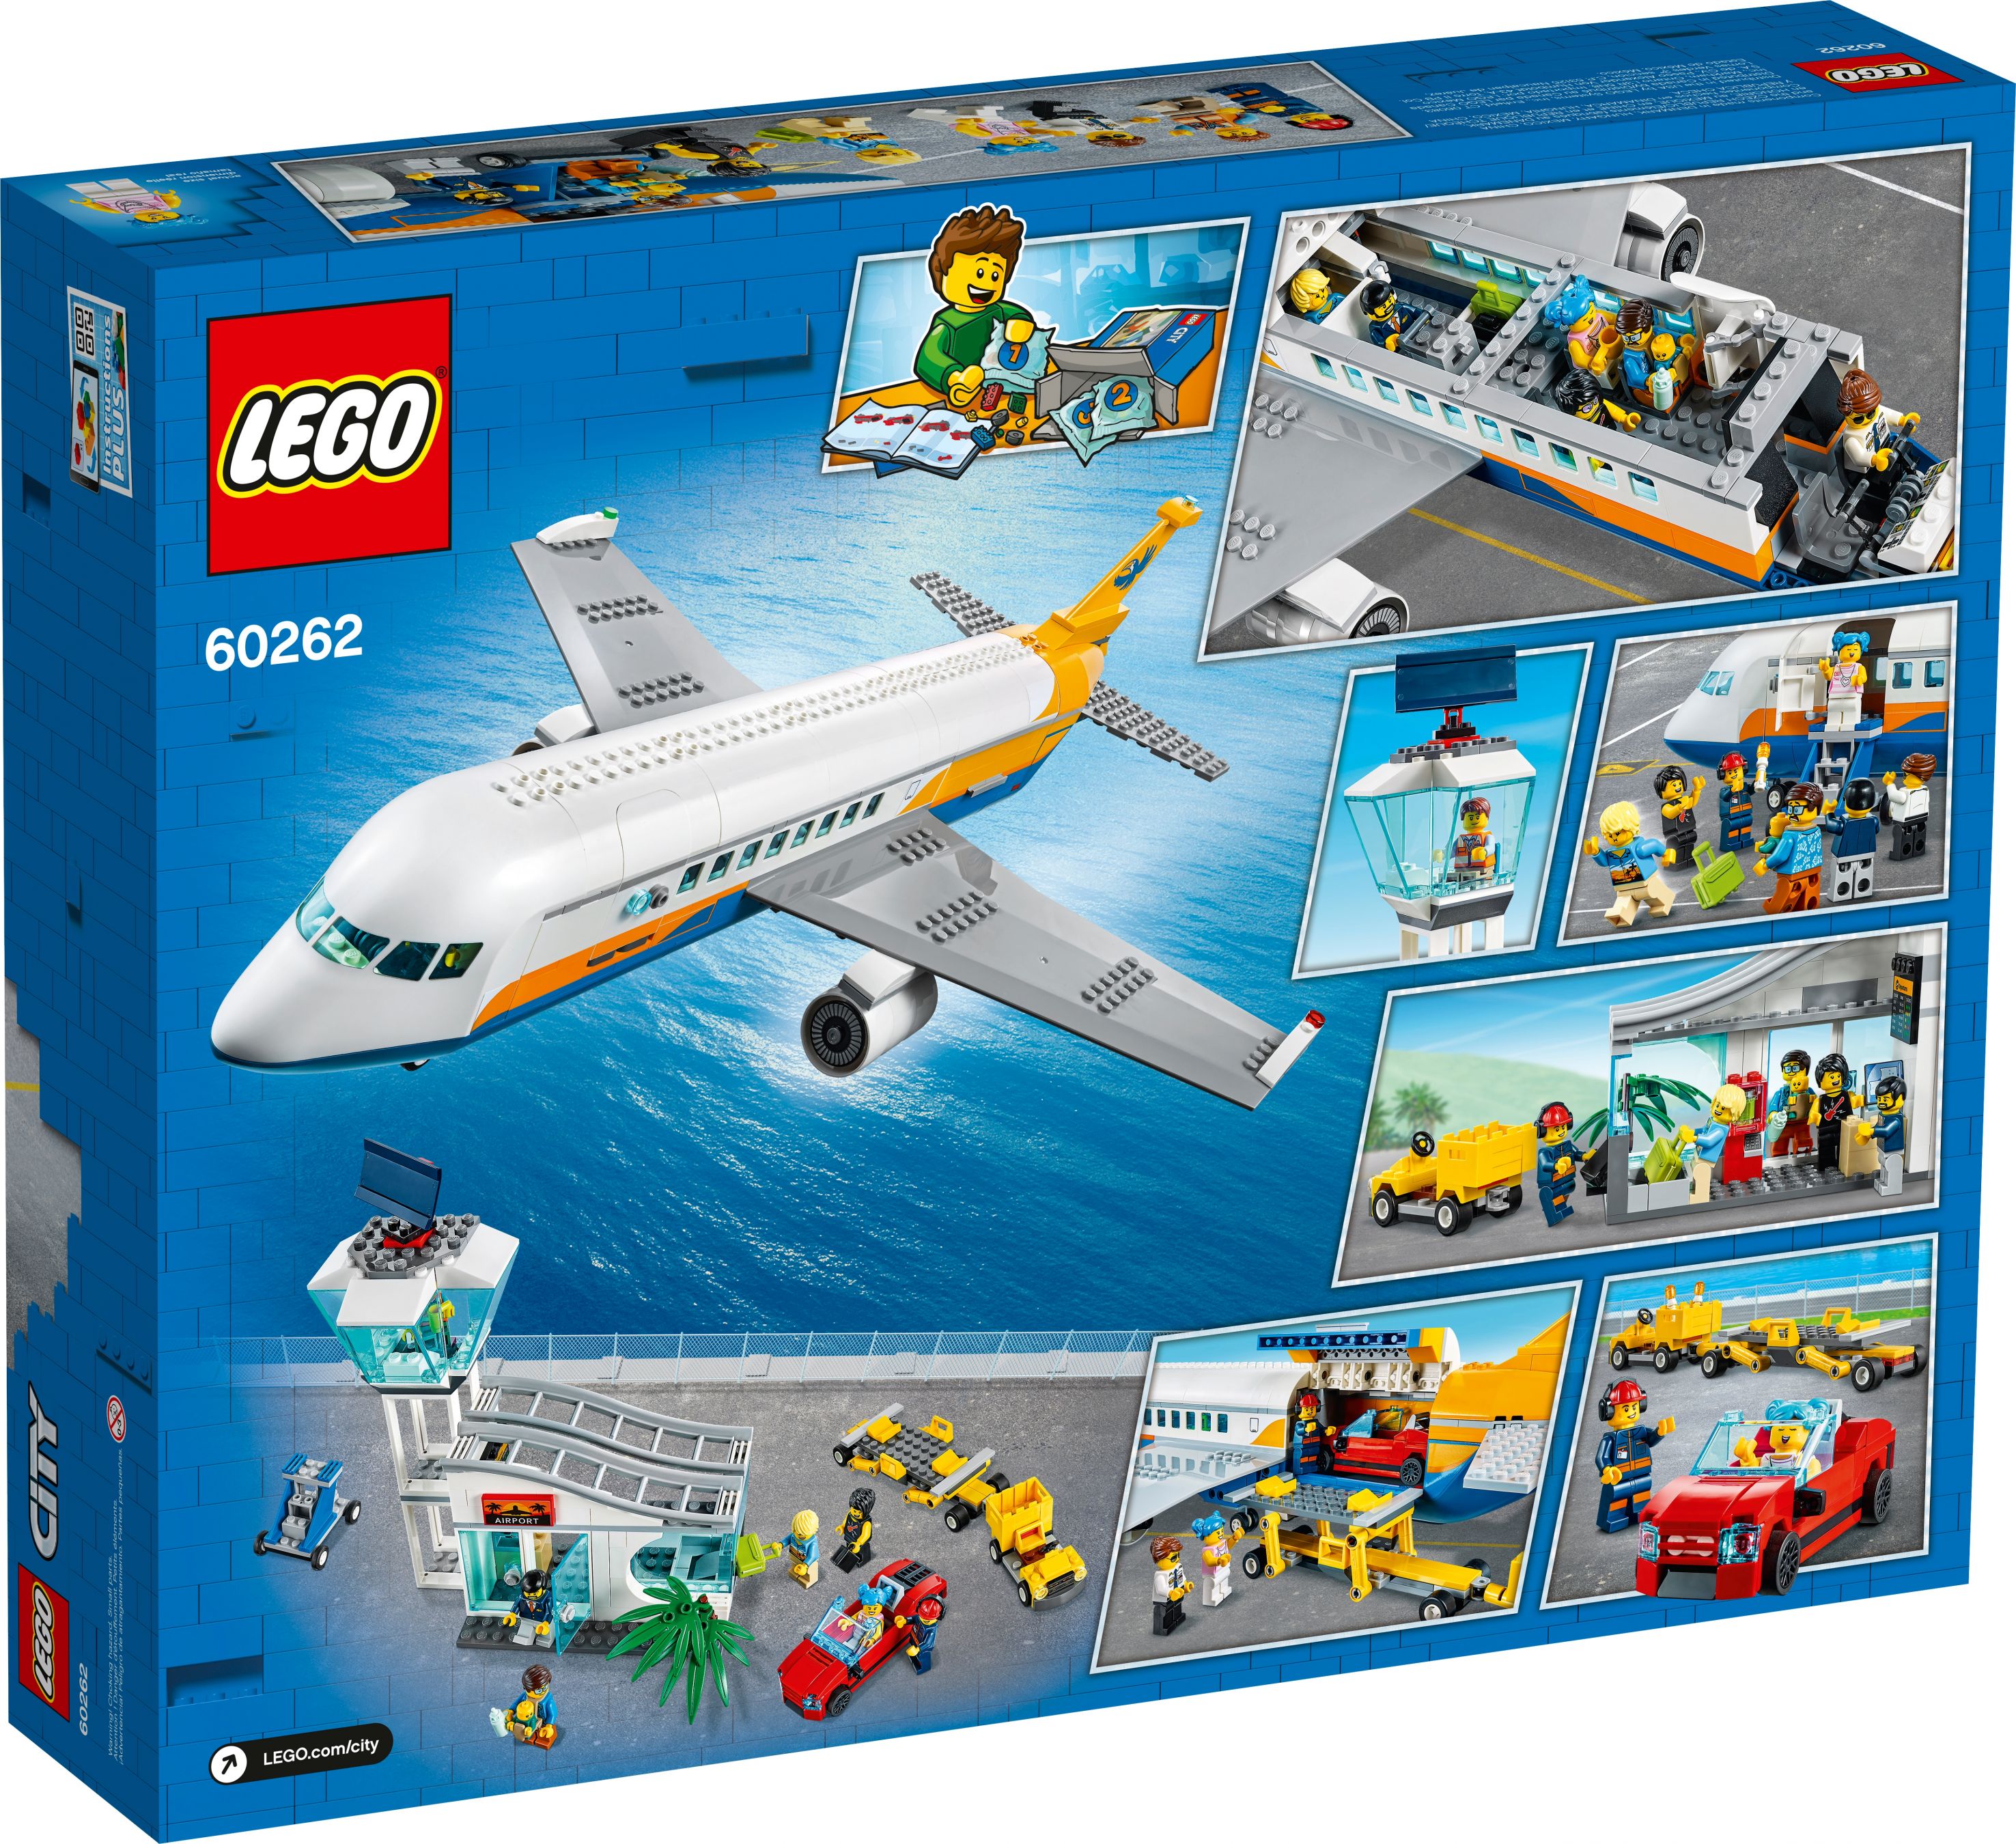 LEGO City 60262 Passagierflugzeug LEGO_60262_alt10.jpg